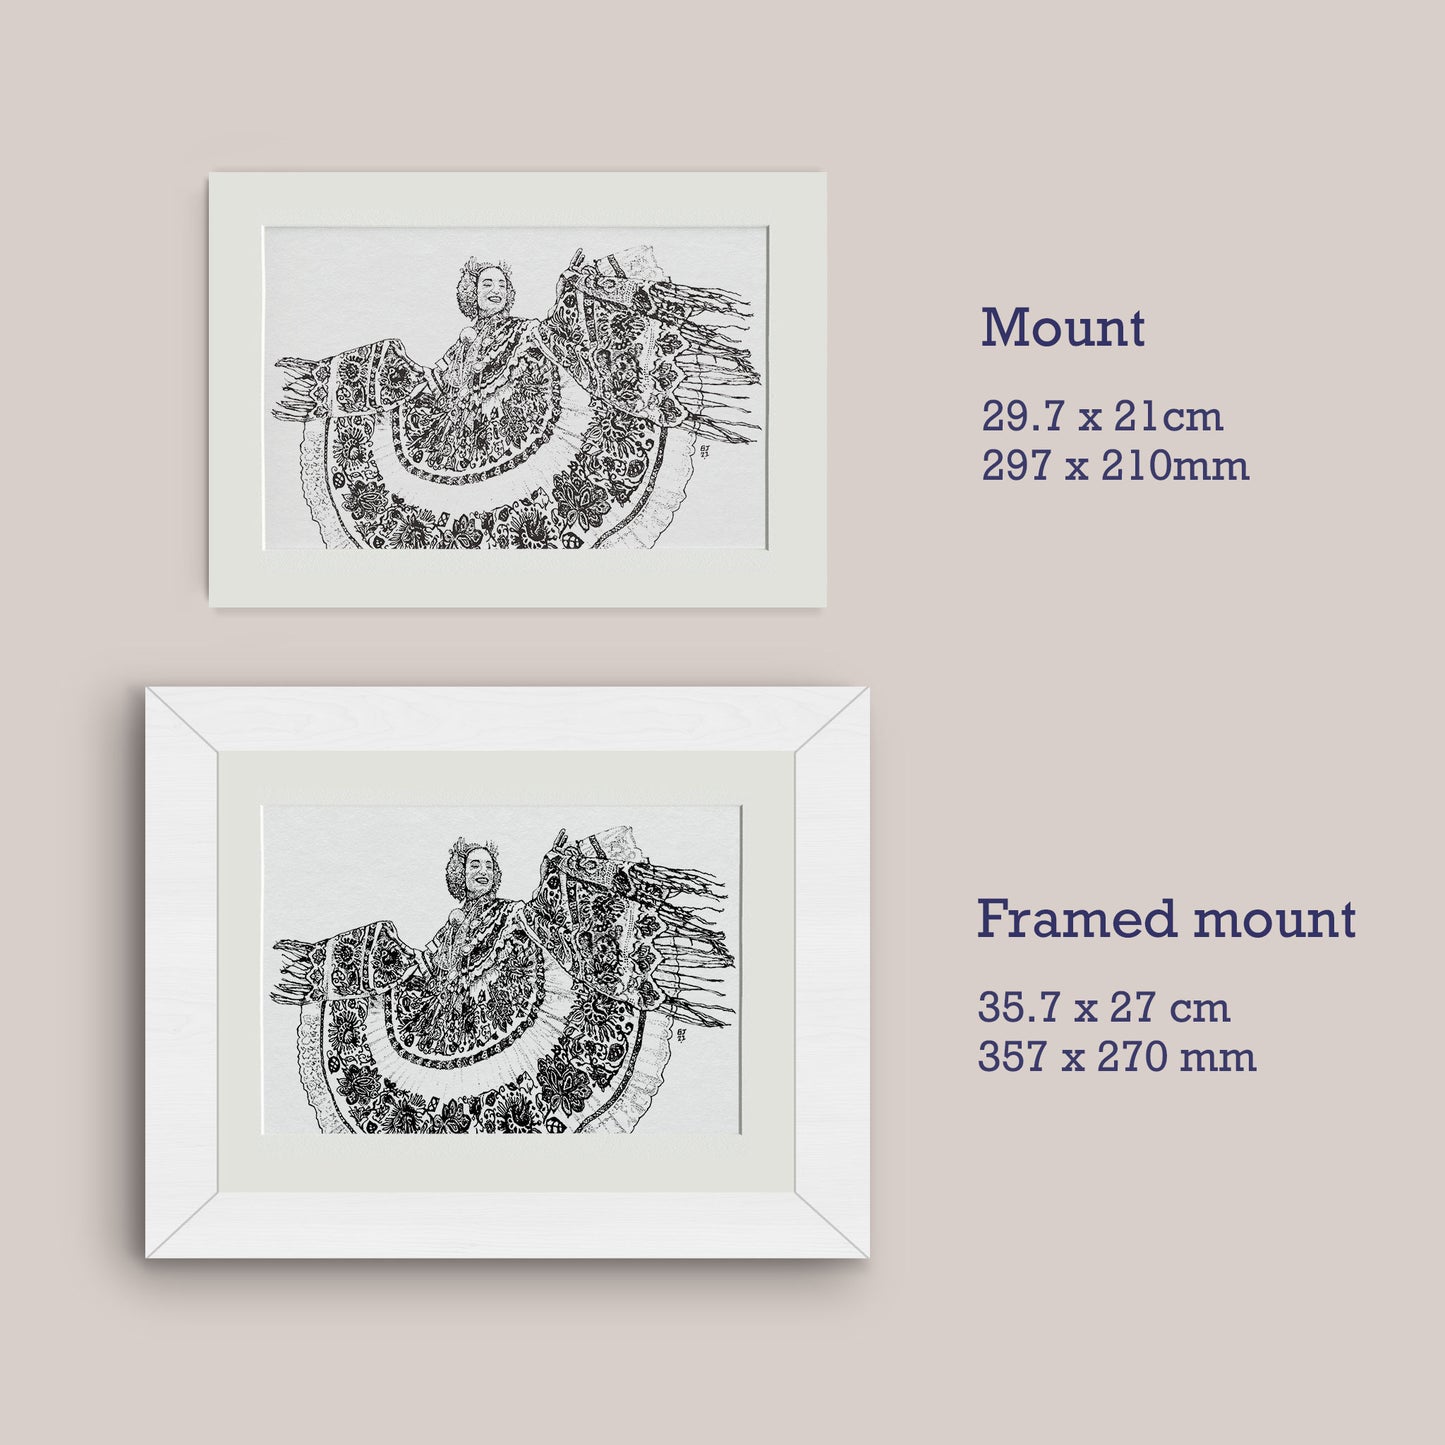 mount print size 29.7 x 21cm, Framed mount 35.7 x37cm